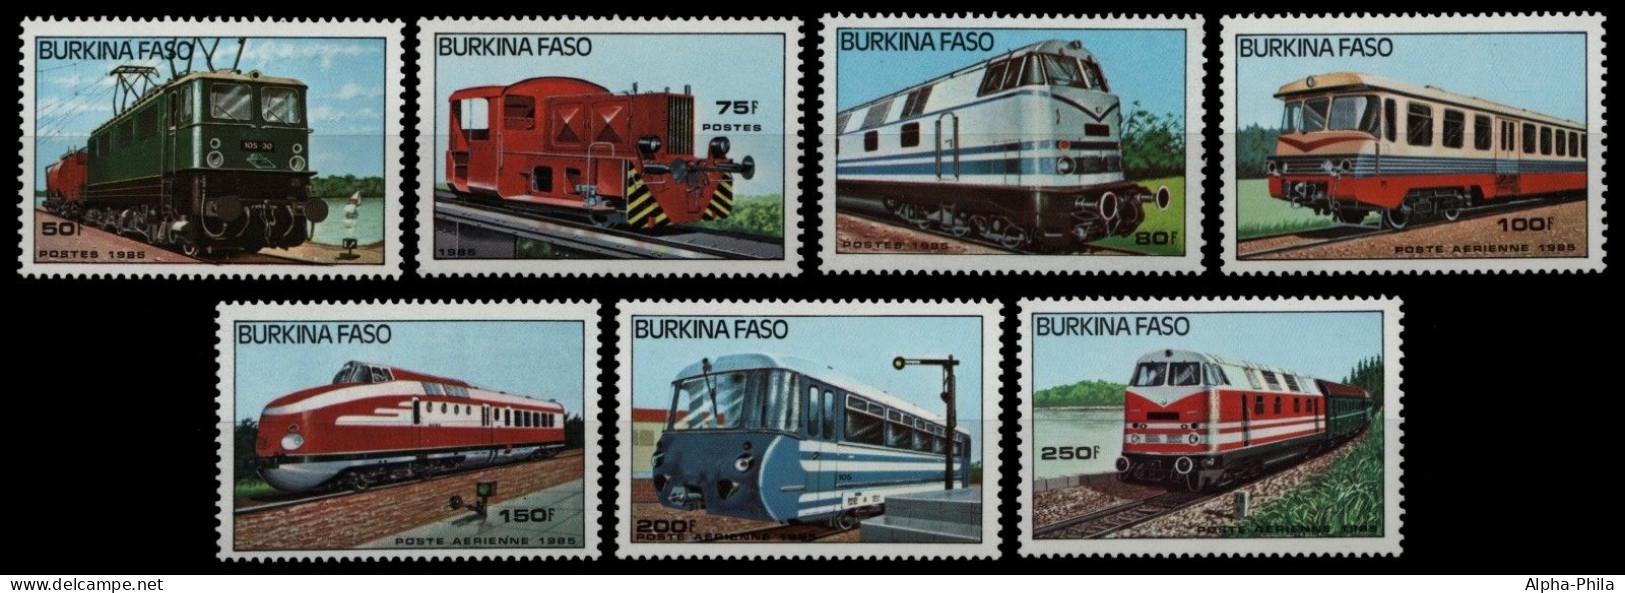 Burkina Faso 1985 - Mi-Nr. 1043-1049 ** - MNH - Lokomotiven / Locomotives - Burkina Faso (1984-...)